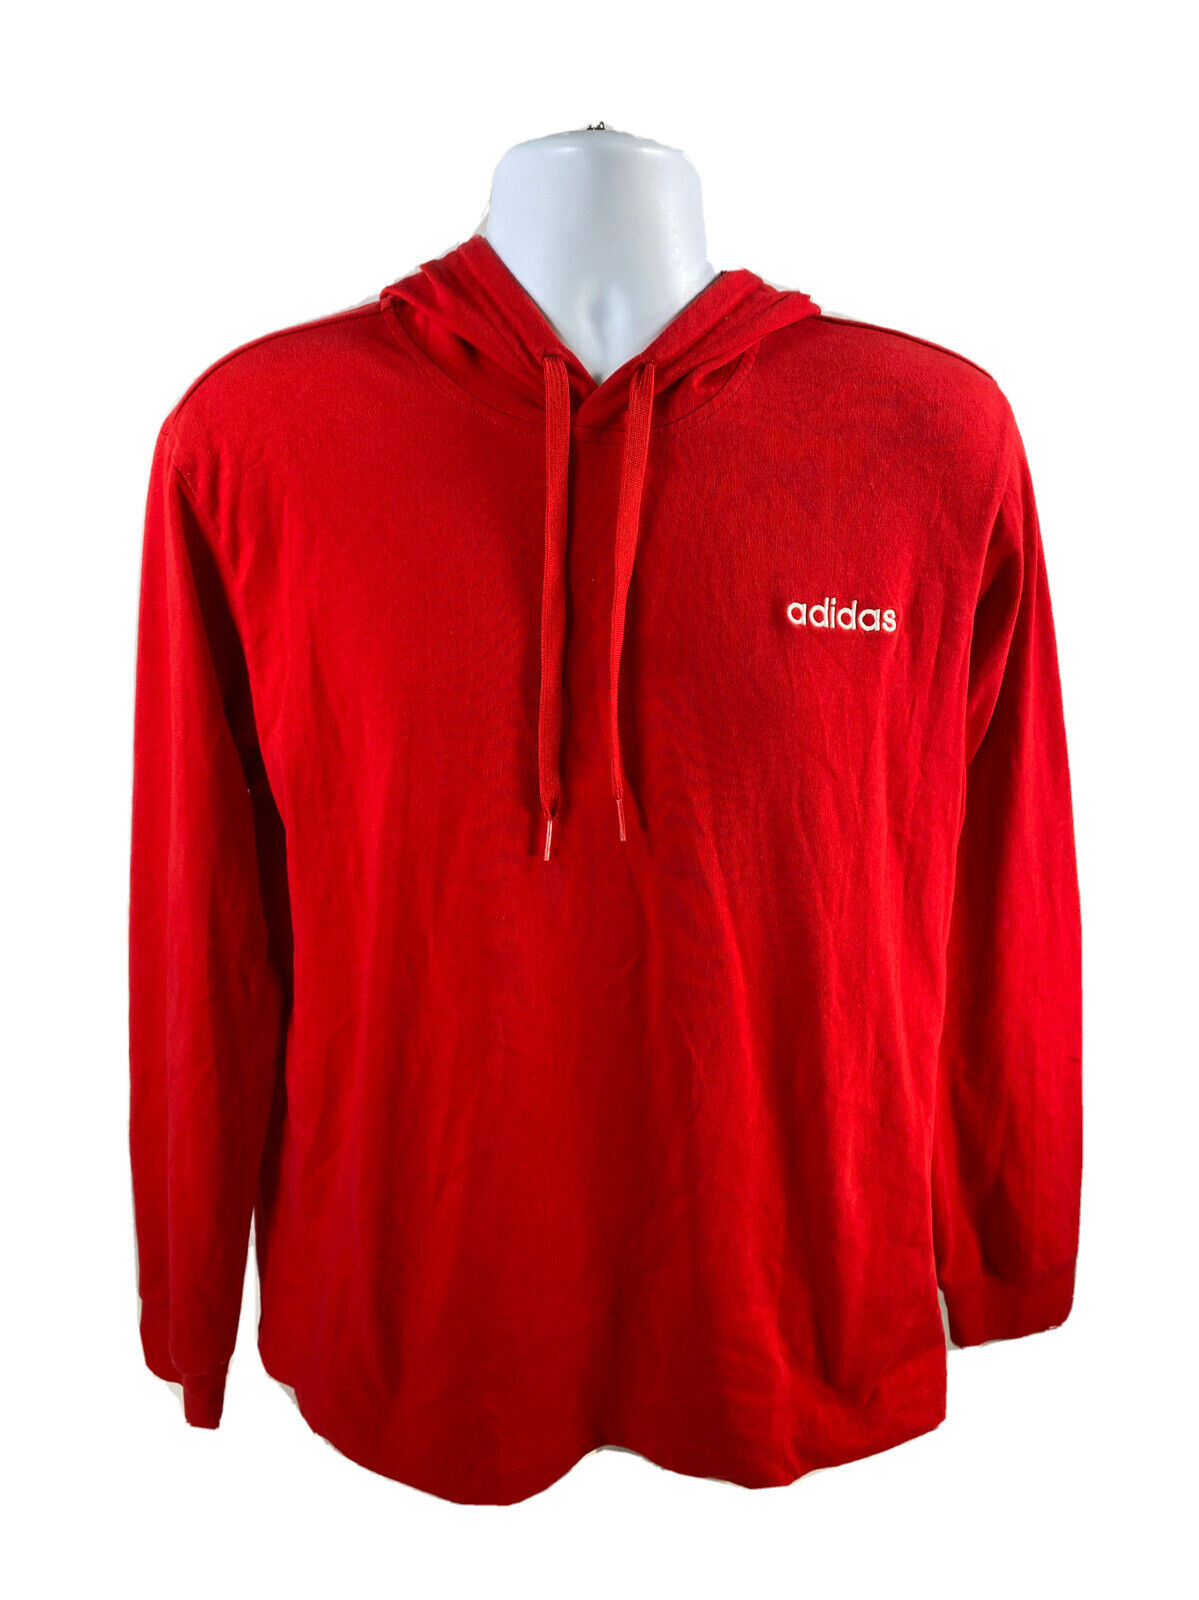 Adidas Sudadera con capucha de algodón ligero de manga larga roja para hombre - L